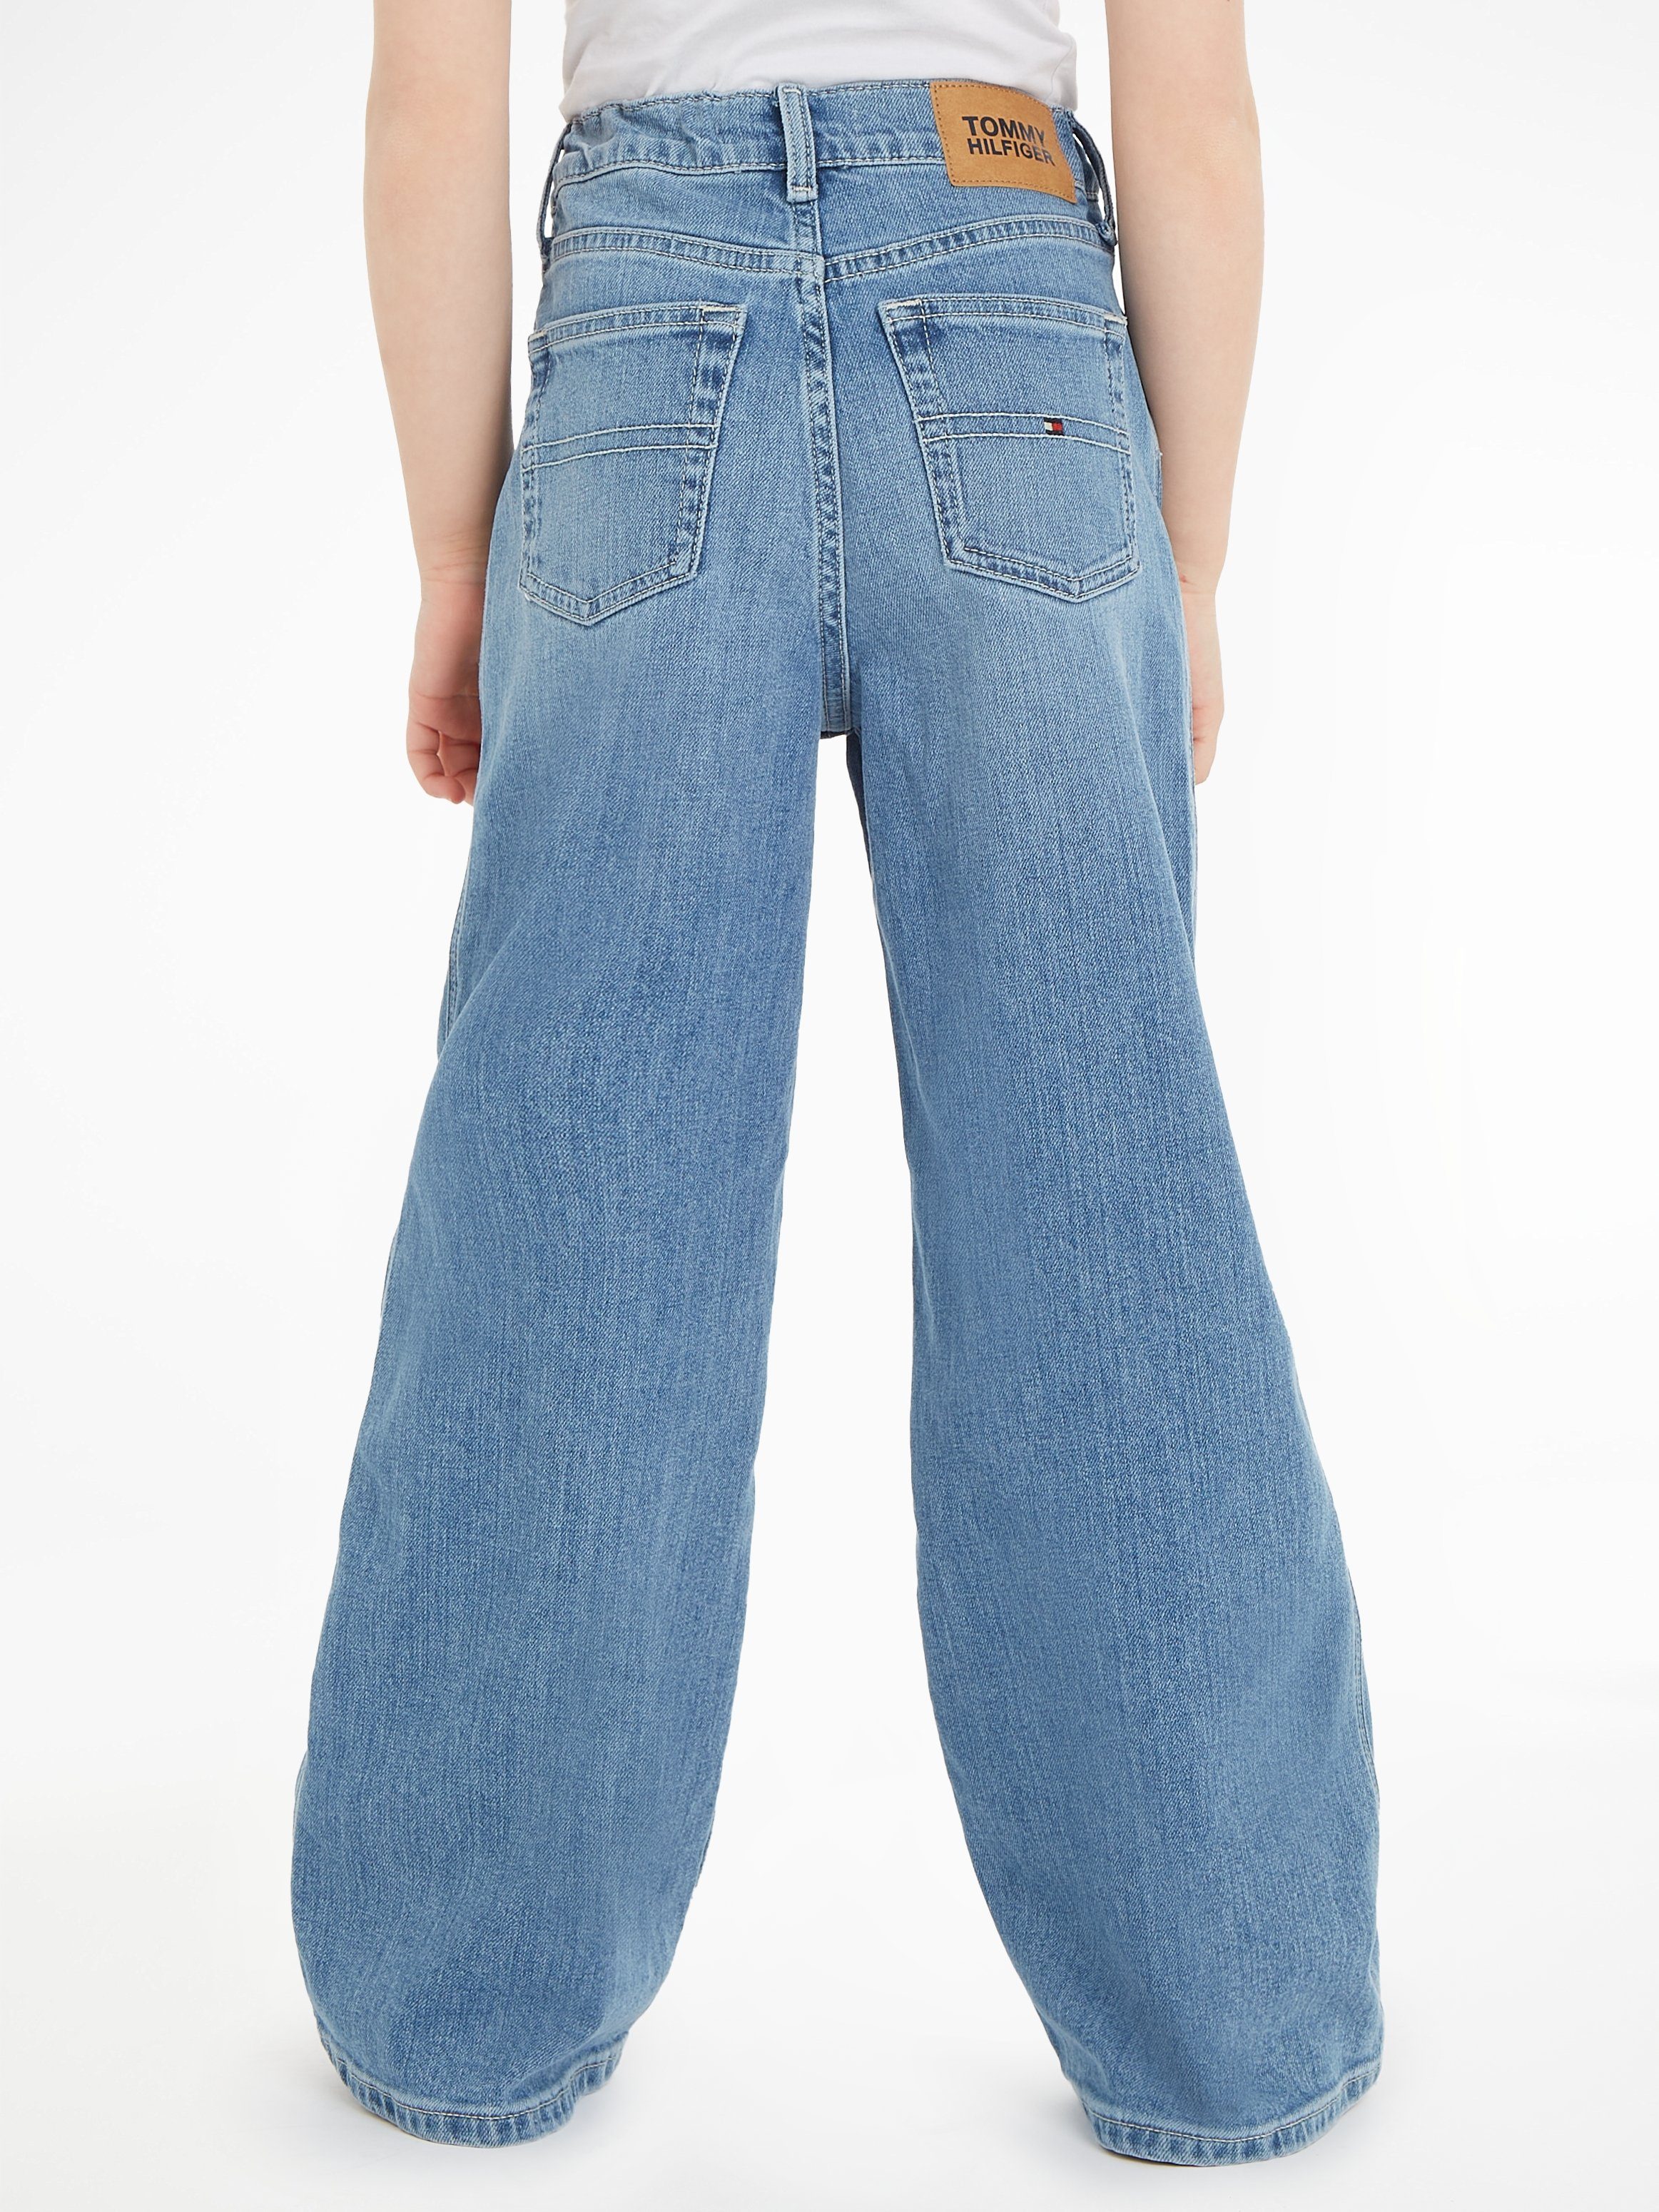 Hilfiger Jeans im Weite 5-Pocket-Style WASH Tommy MABEL MID